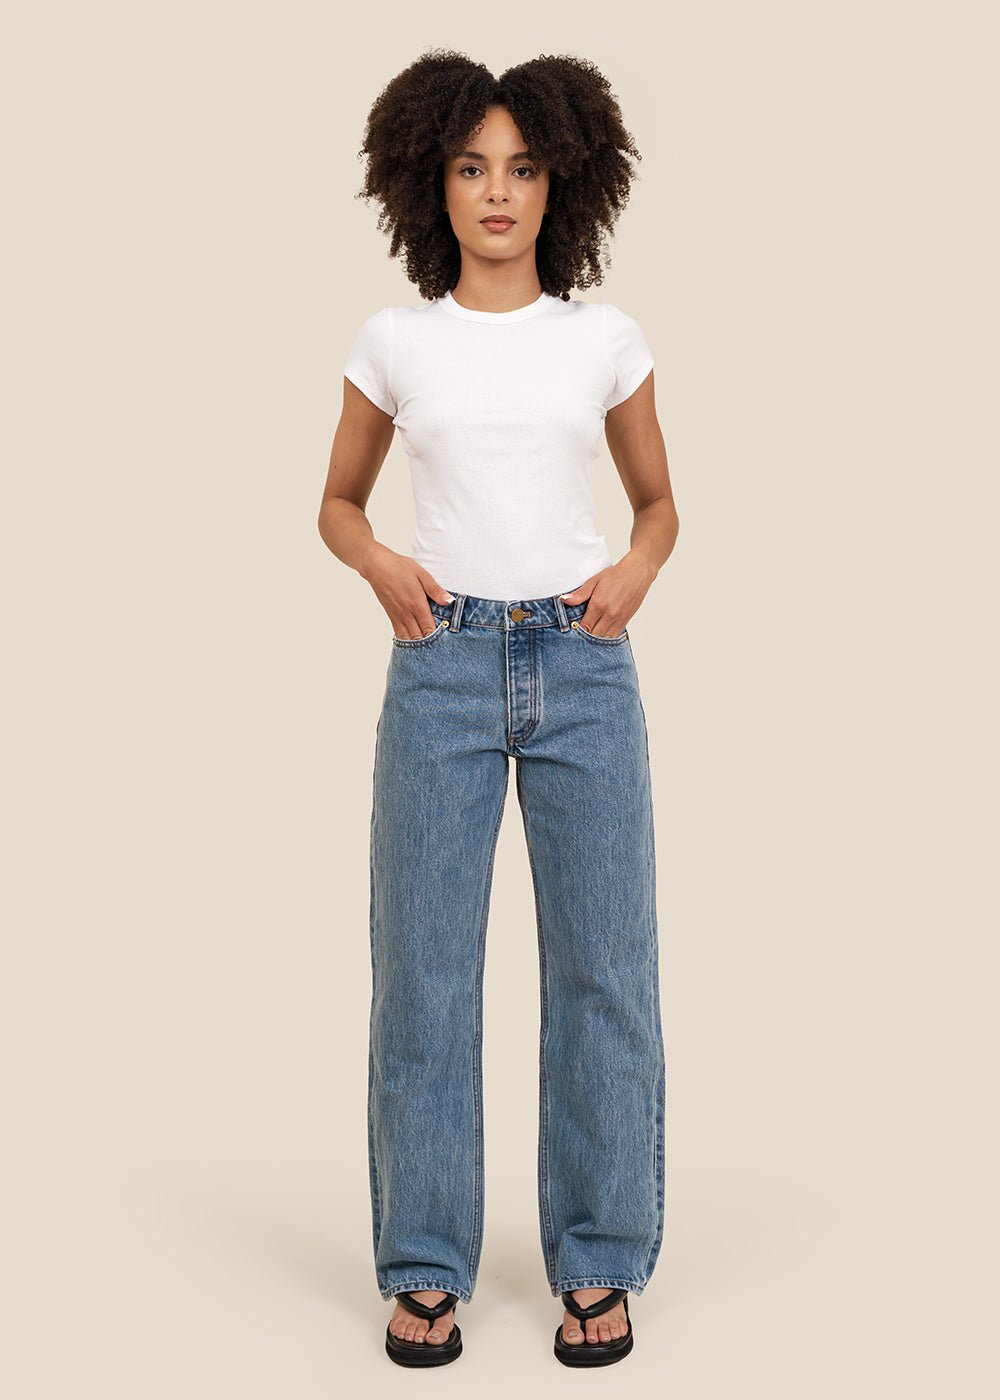 Wide-leg loose fit jeans - Women's fashion